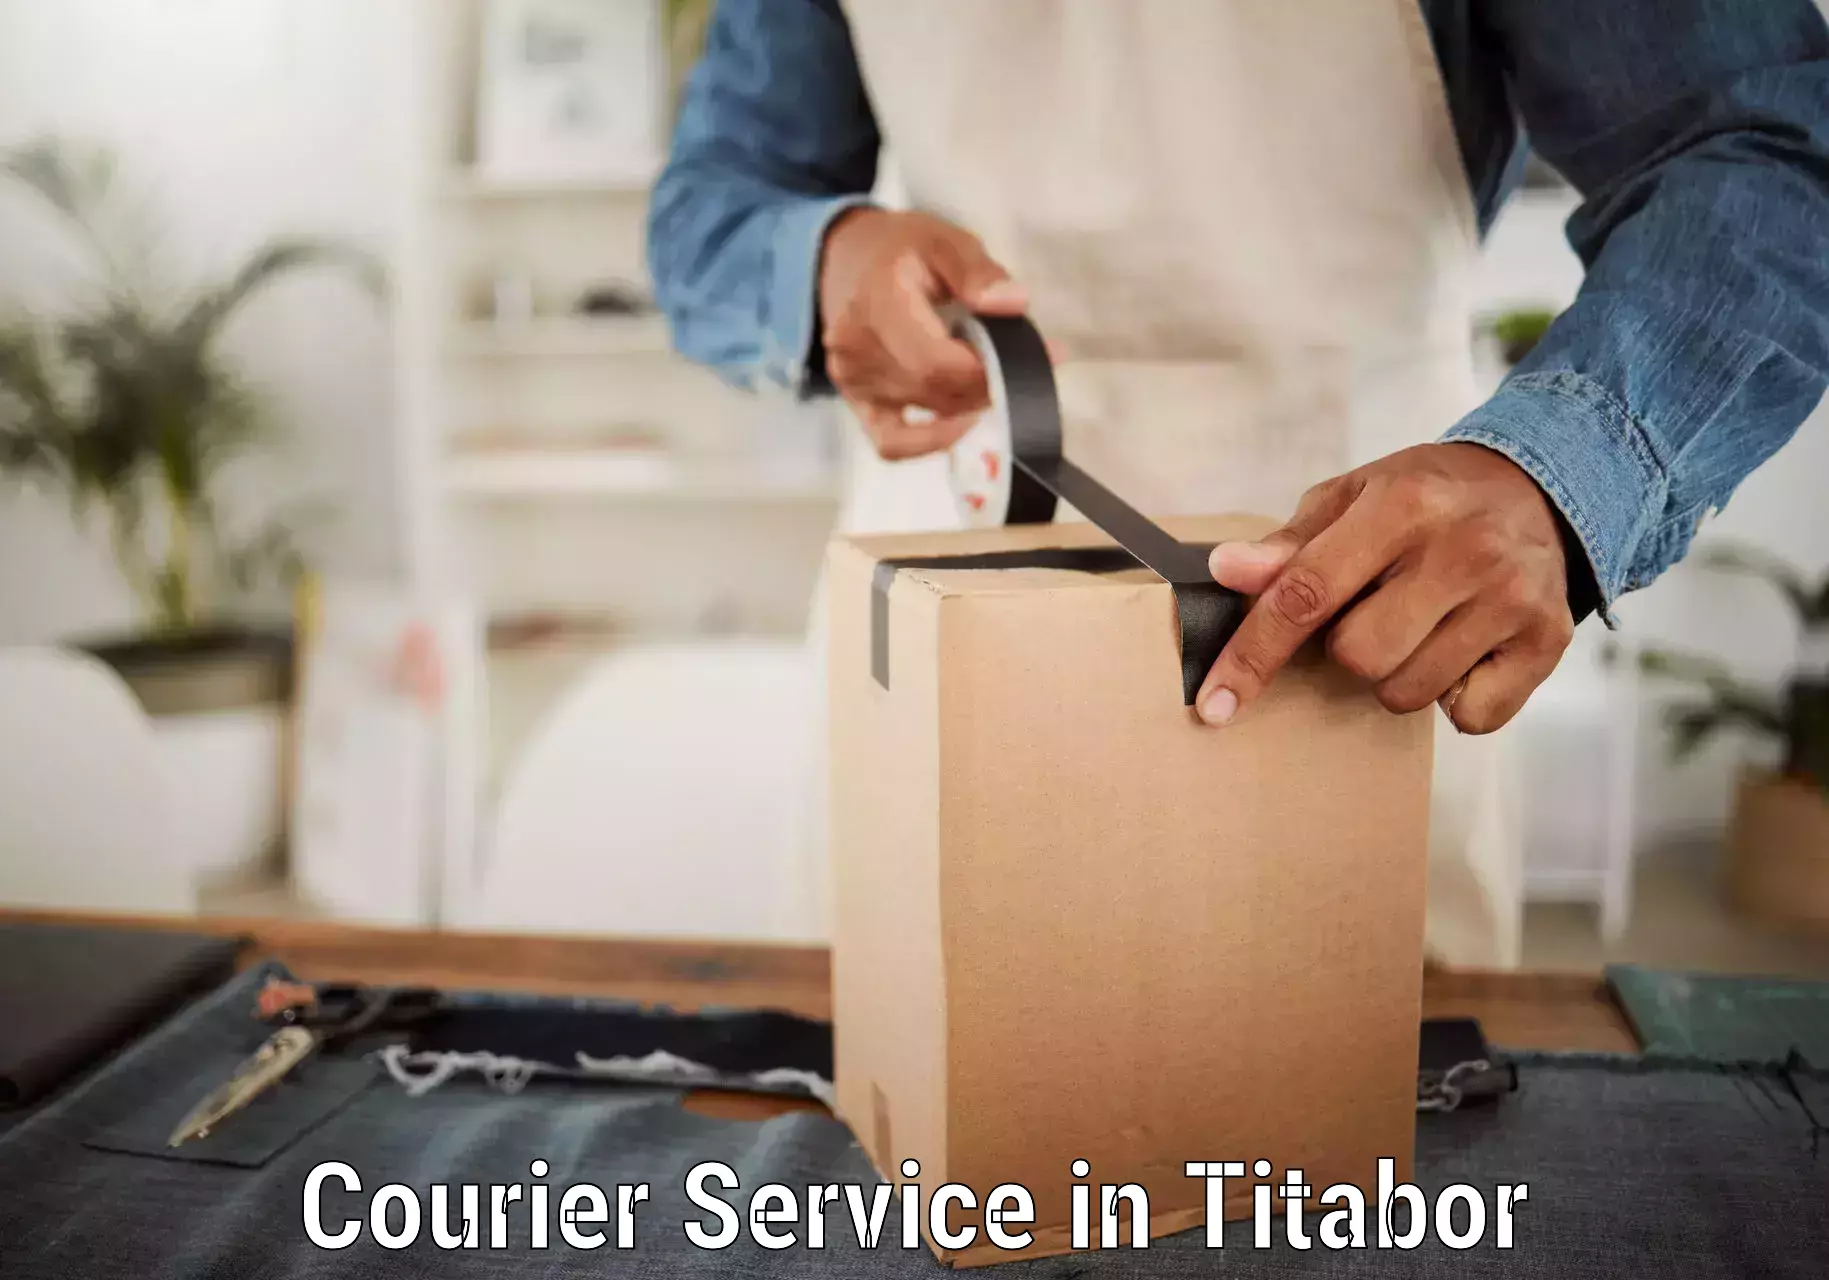 Quick dispatch service in Titabor